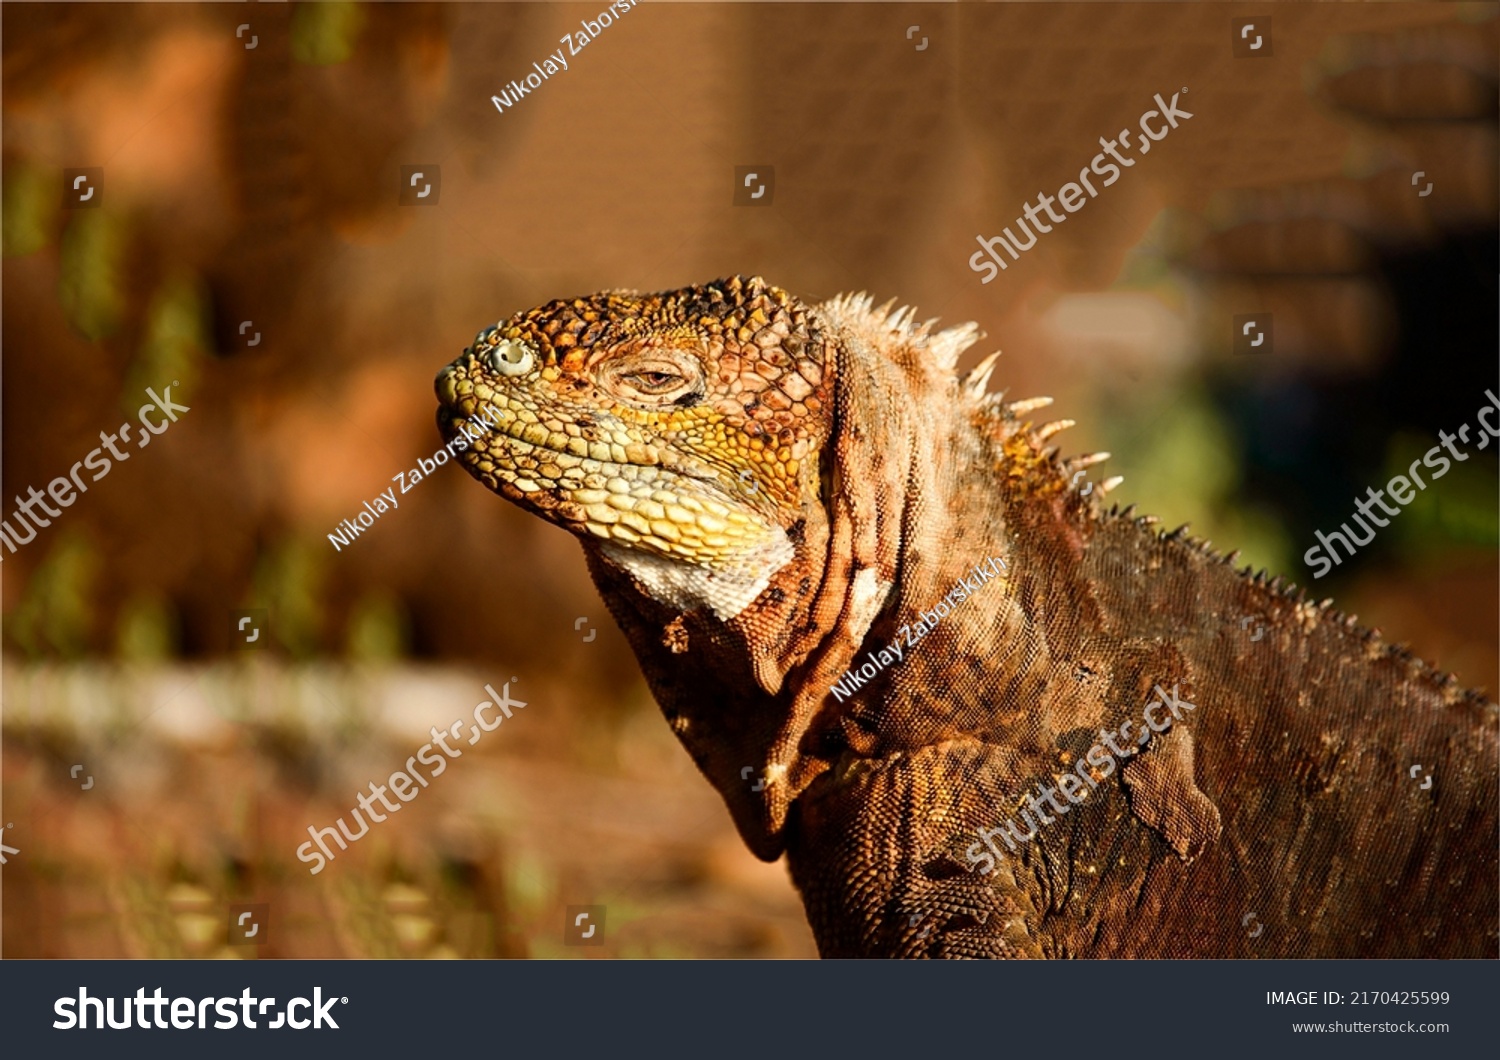 Portrait of an iguana close-up. Iguana lizard. Iguana in nature. Iguana portrait #2170425599